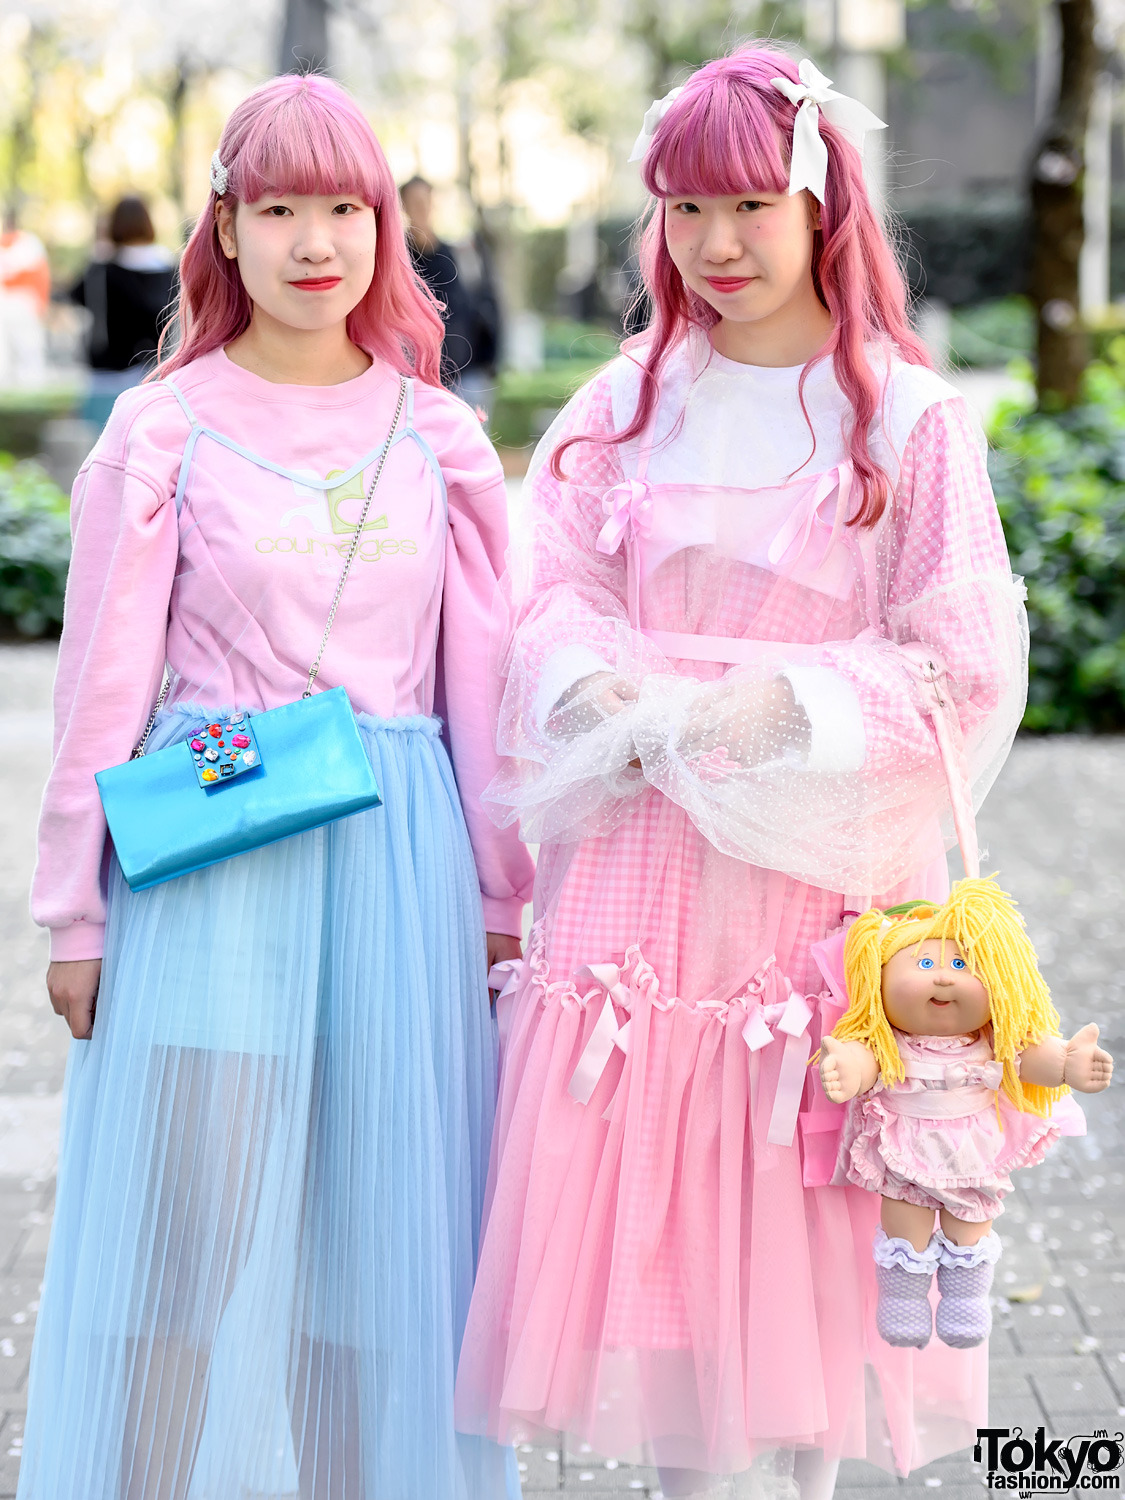 tokyo-fashion:  18-year-old Japanese twins Suzune and Ayane on the street near Bunka